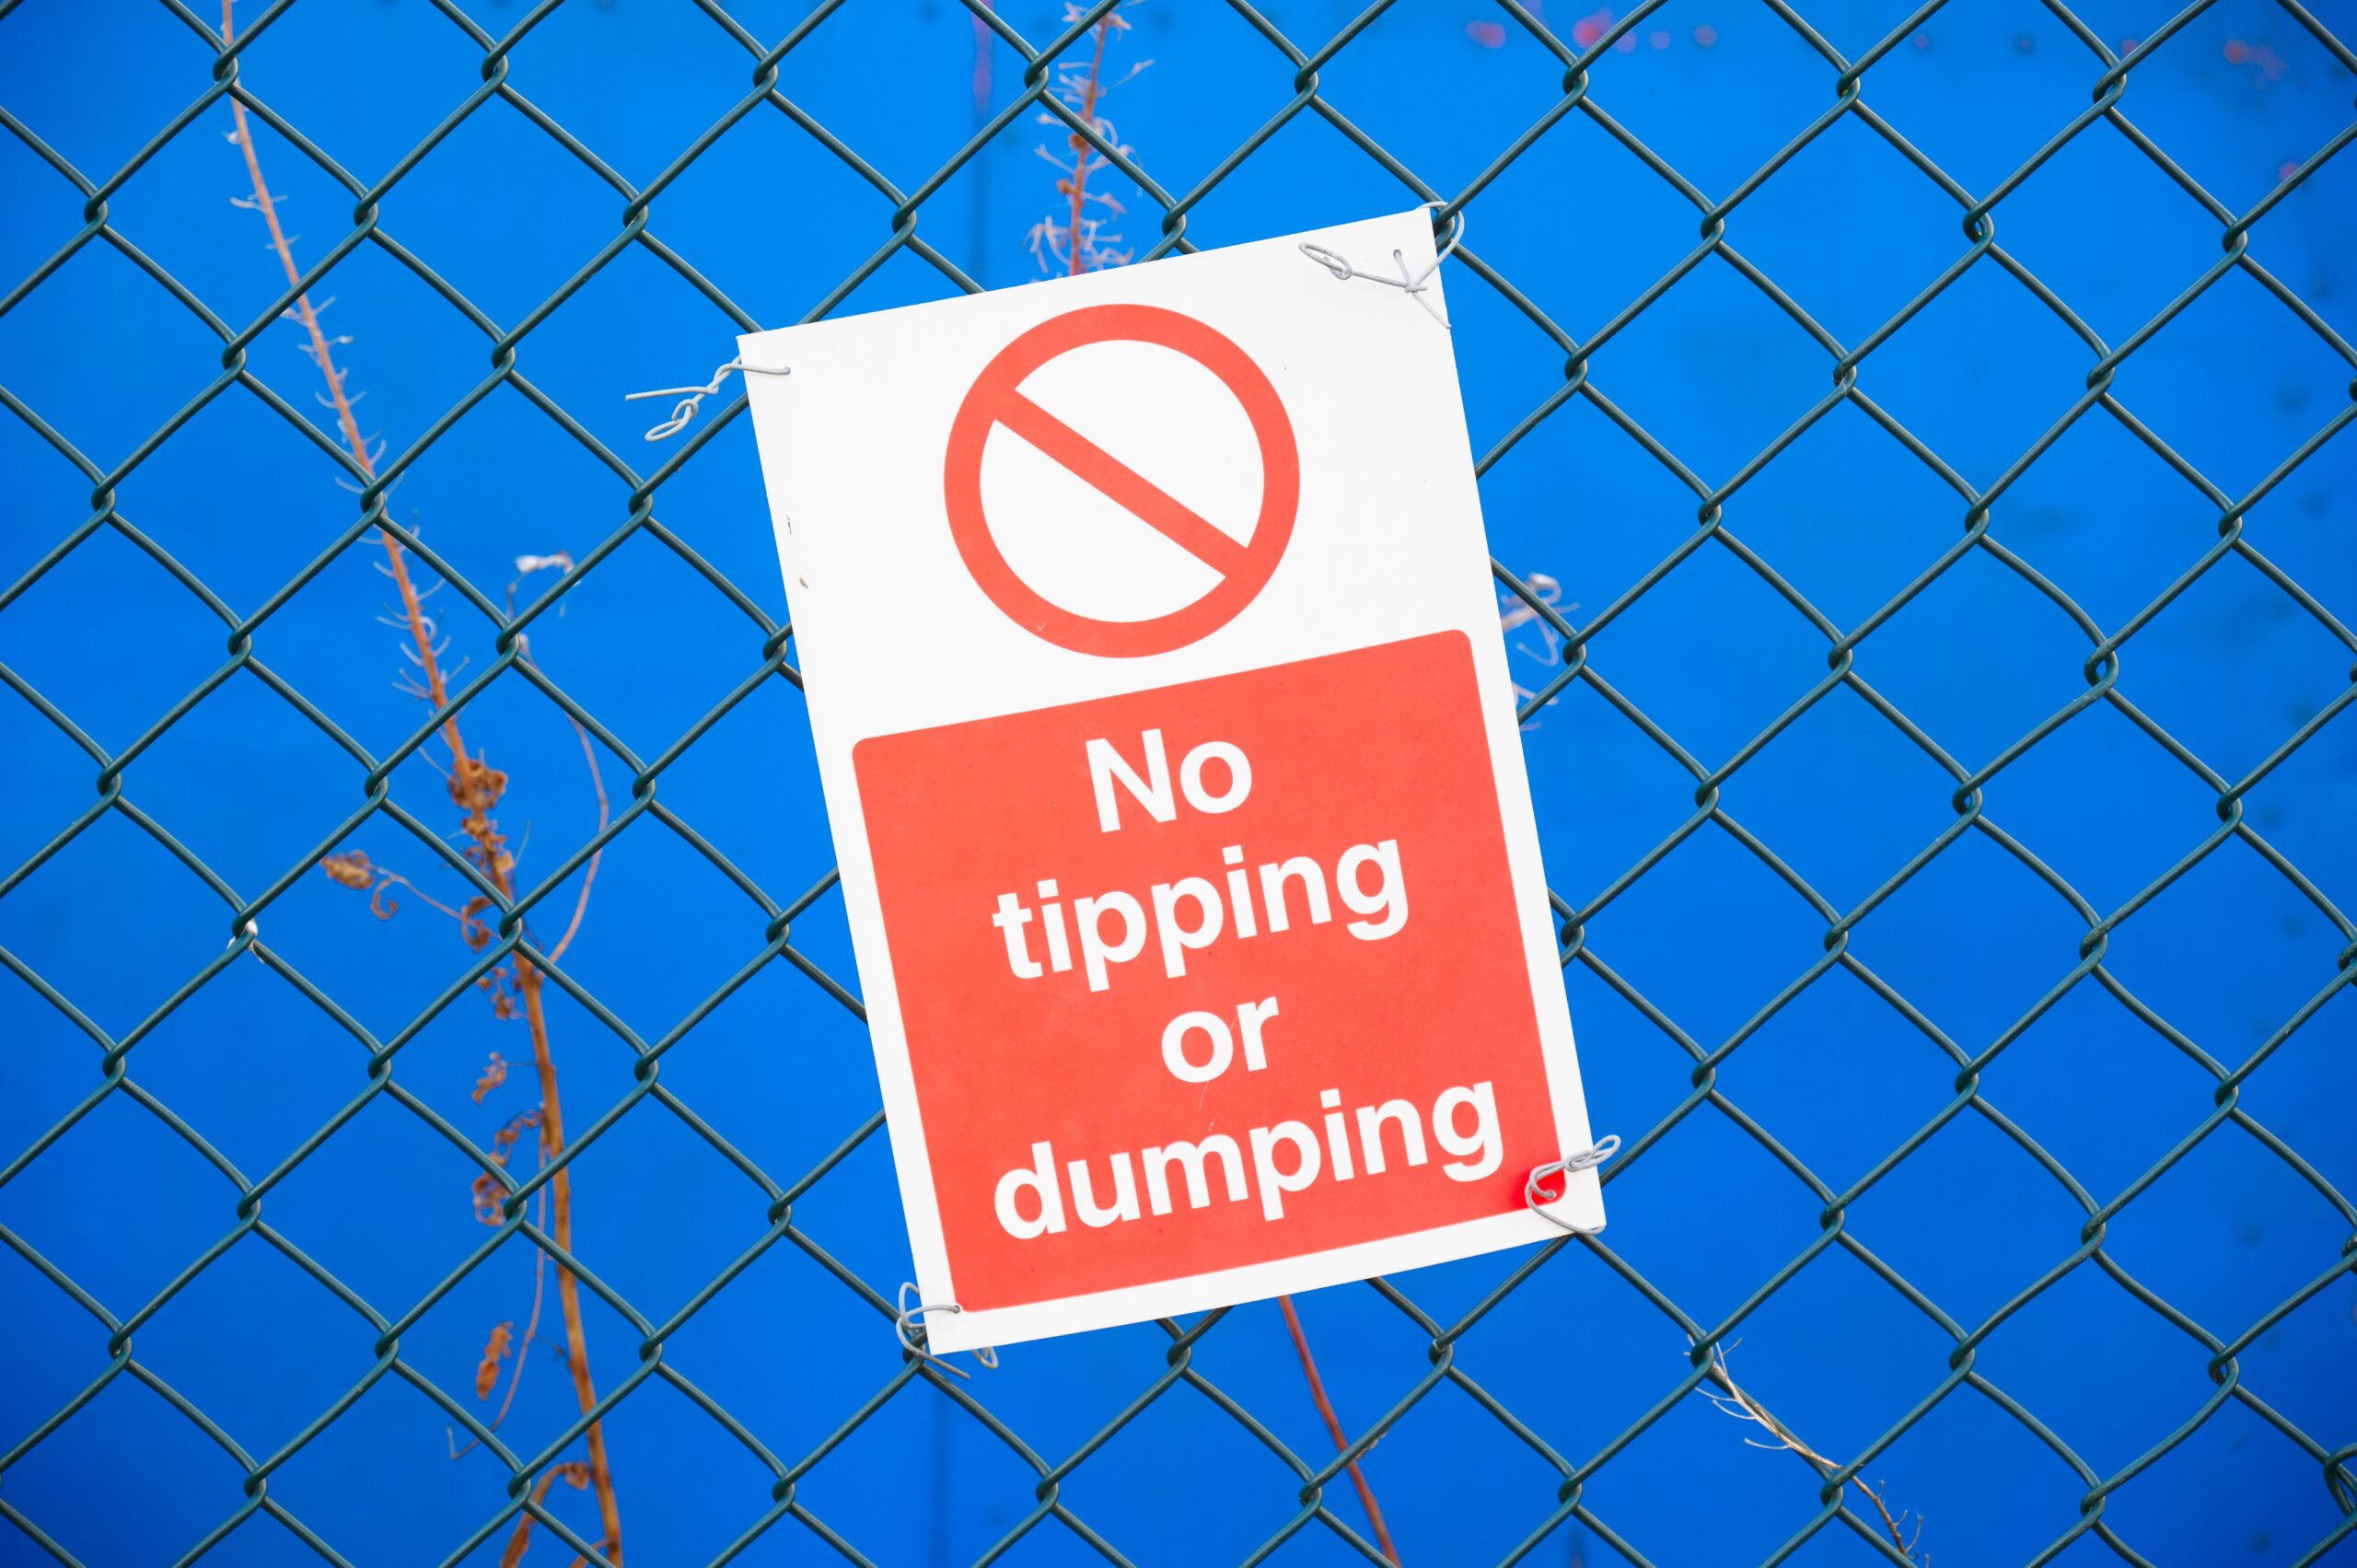 'No tipping or dumping' warning sign